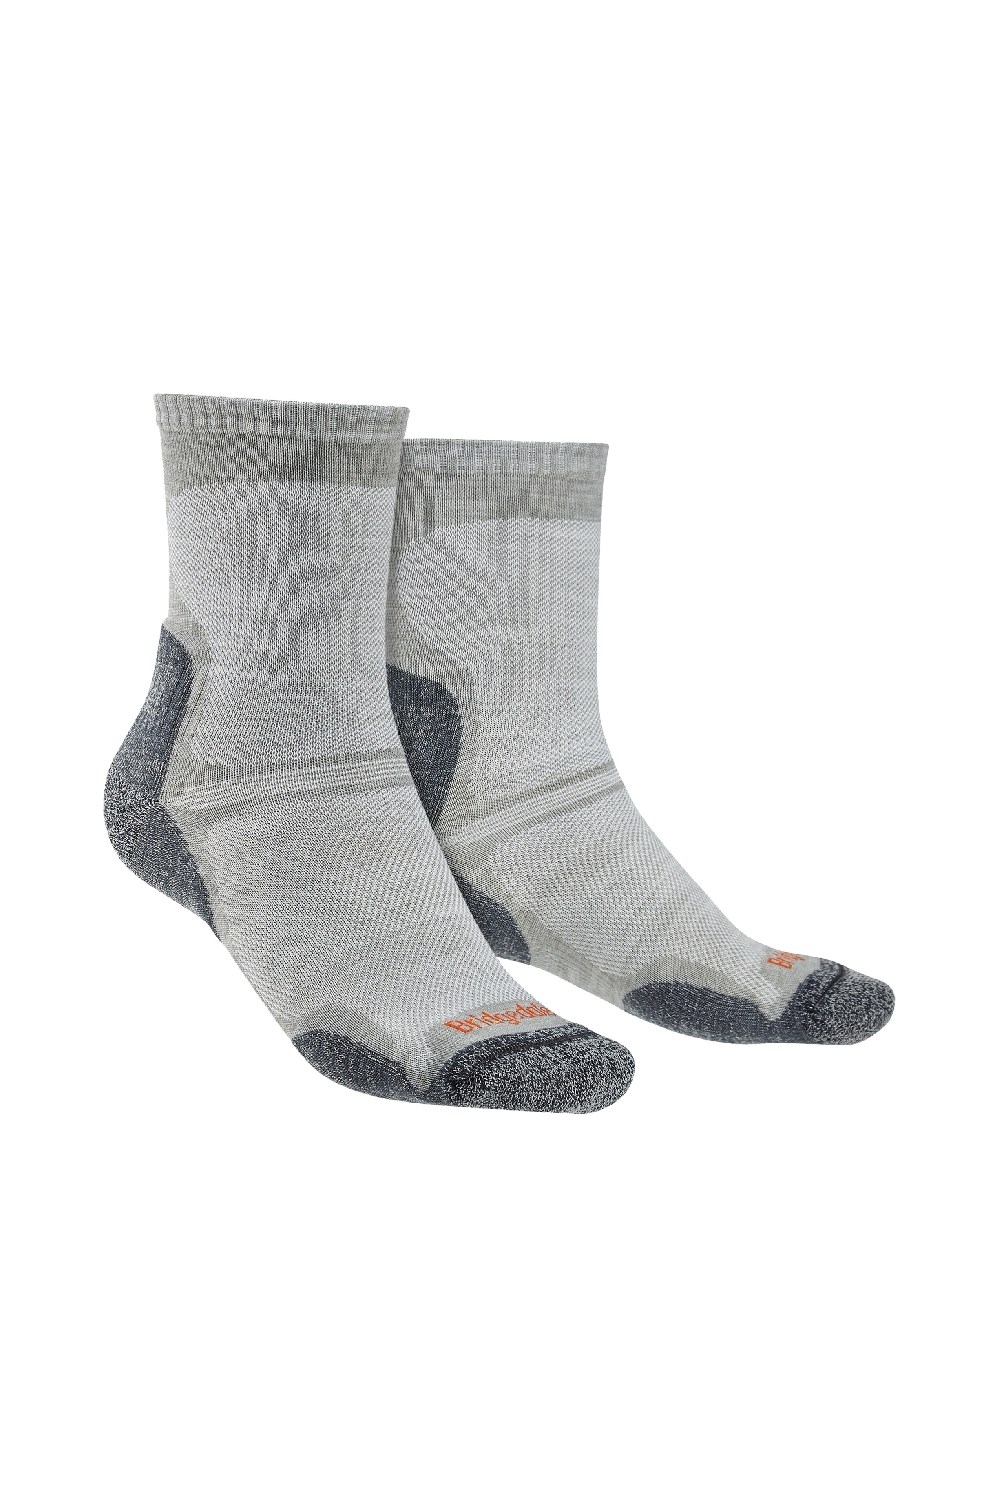 Mens Ultralight T2 Merino Hiking Socks